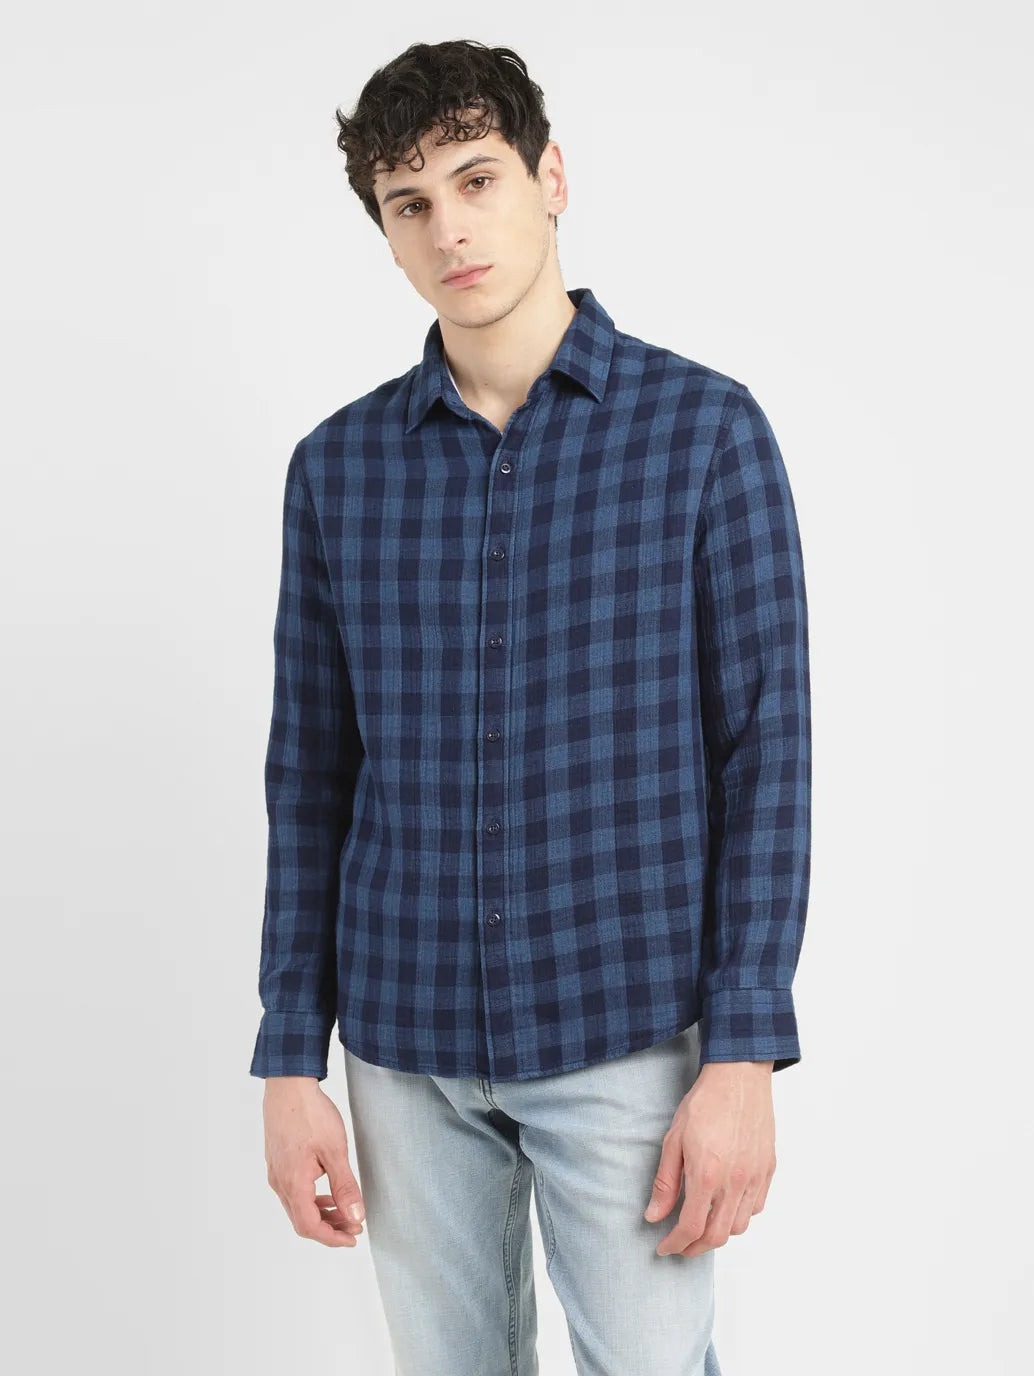 Men's Checkered Slim Fit  Shirt